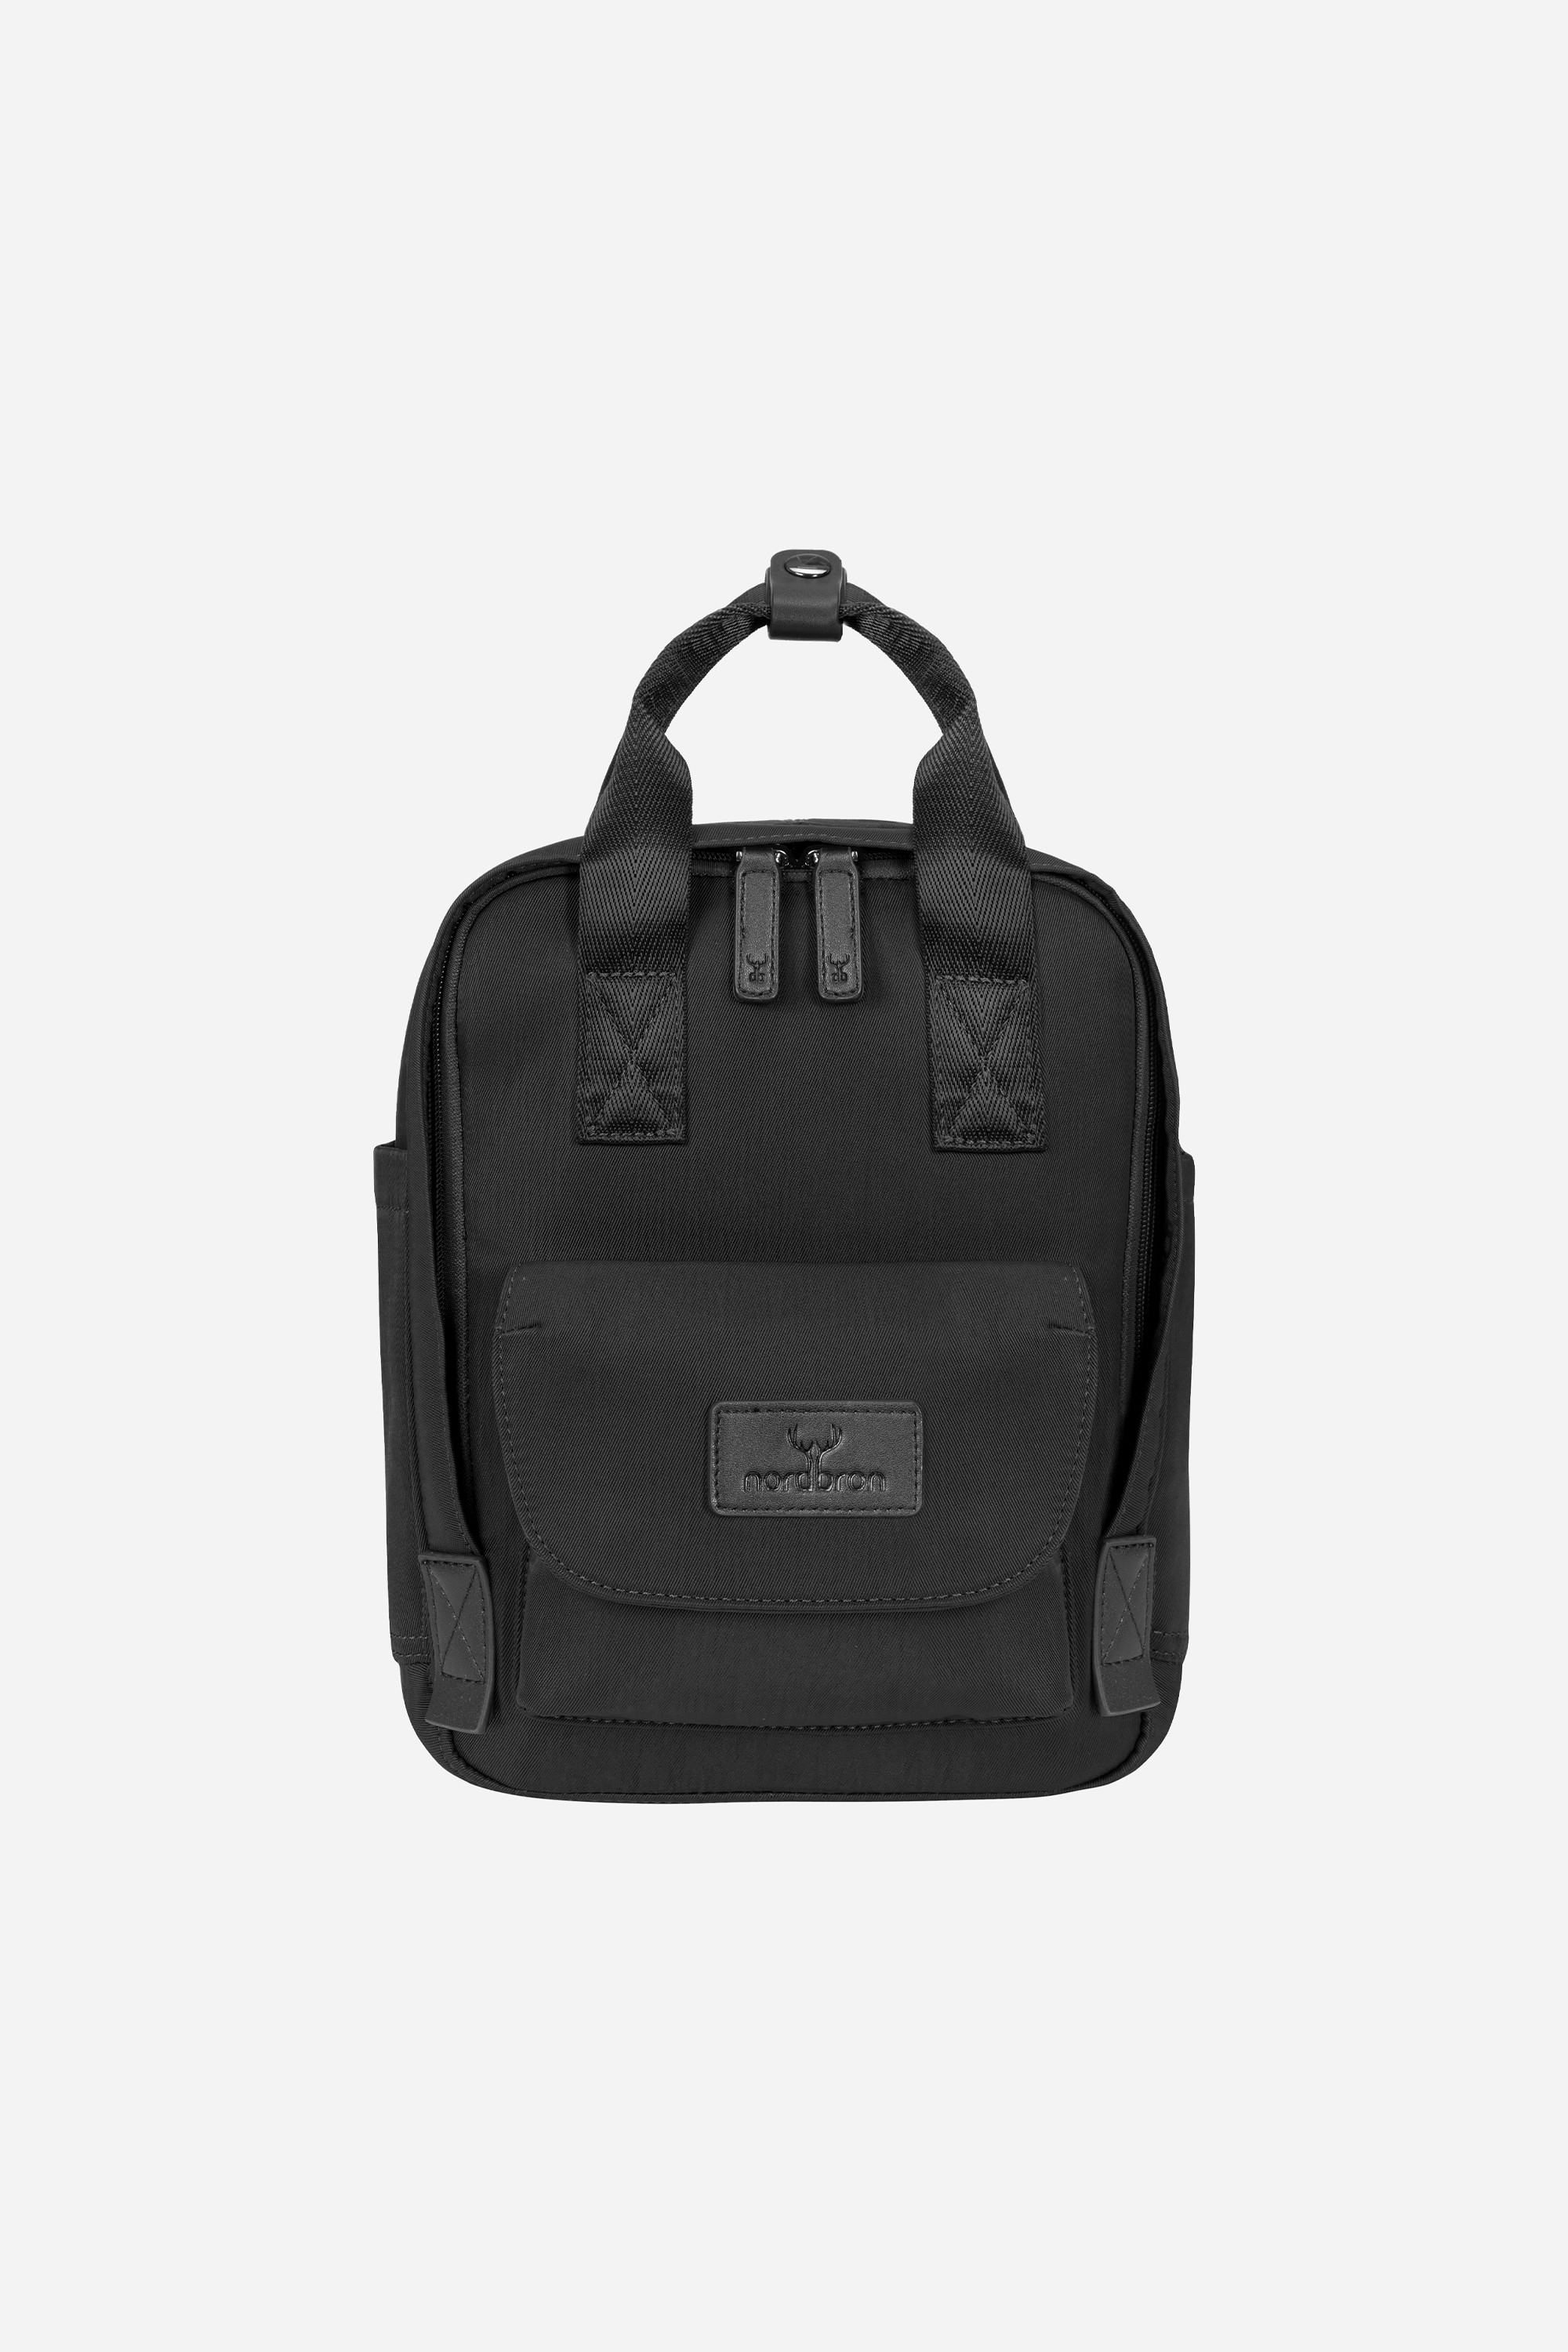 Lucerne Nordbron Mini Backpack - Black